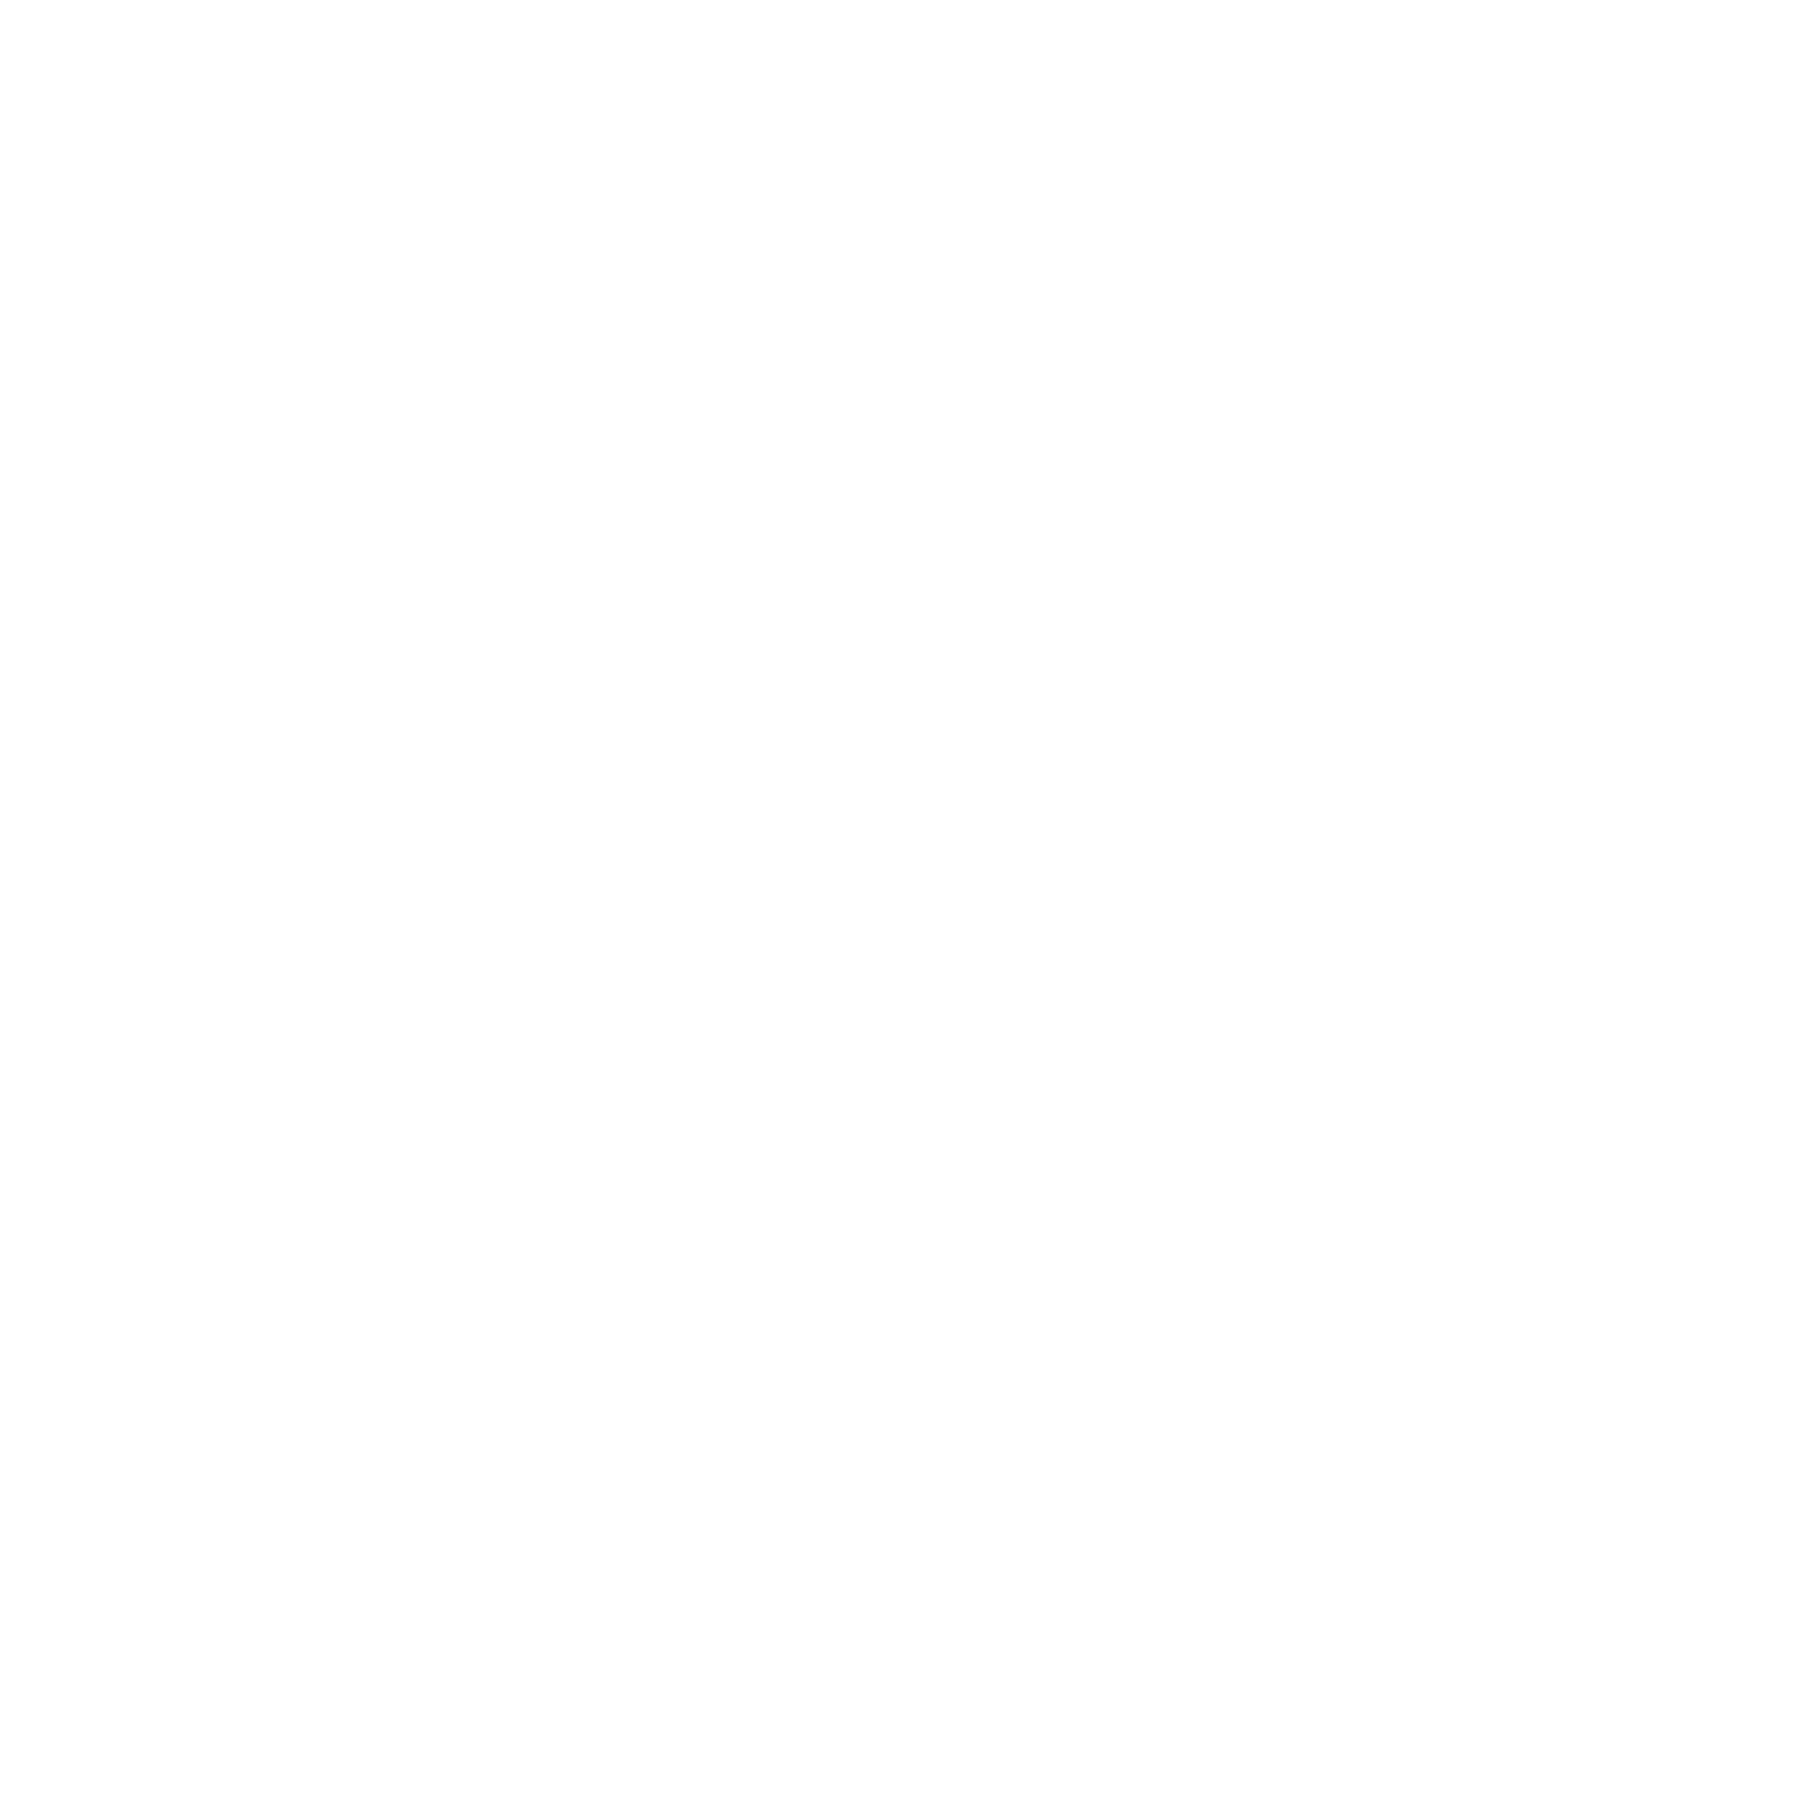 Sunset Company